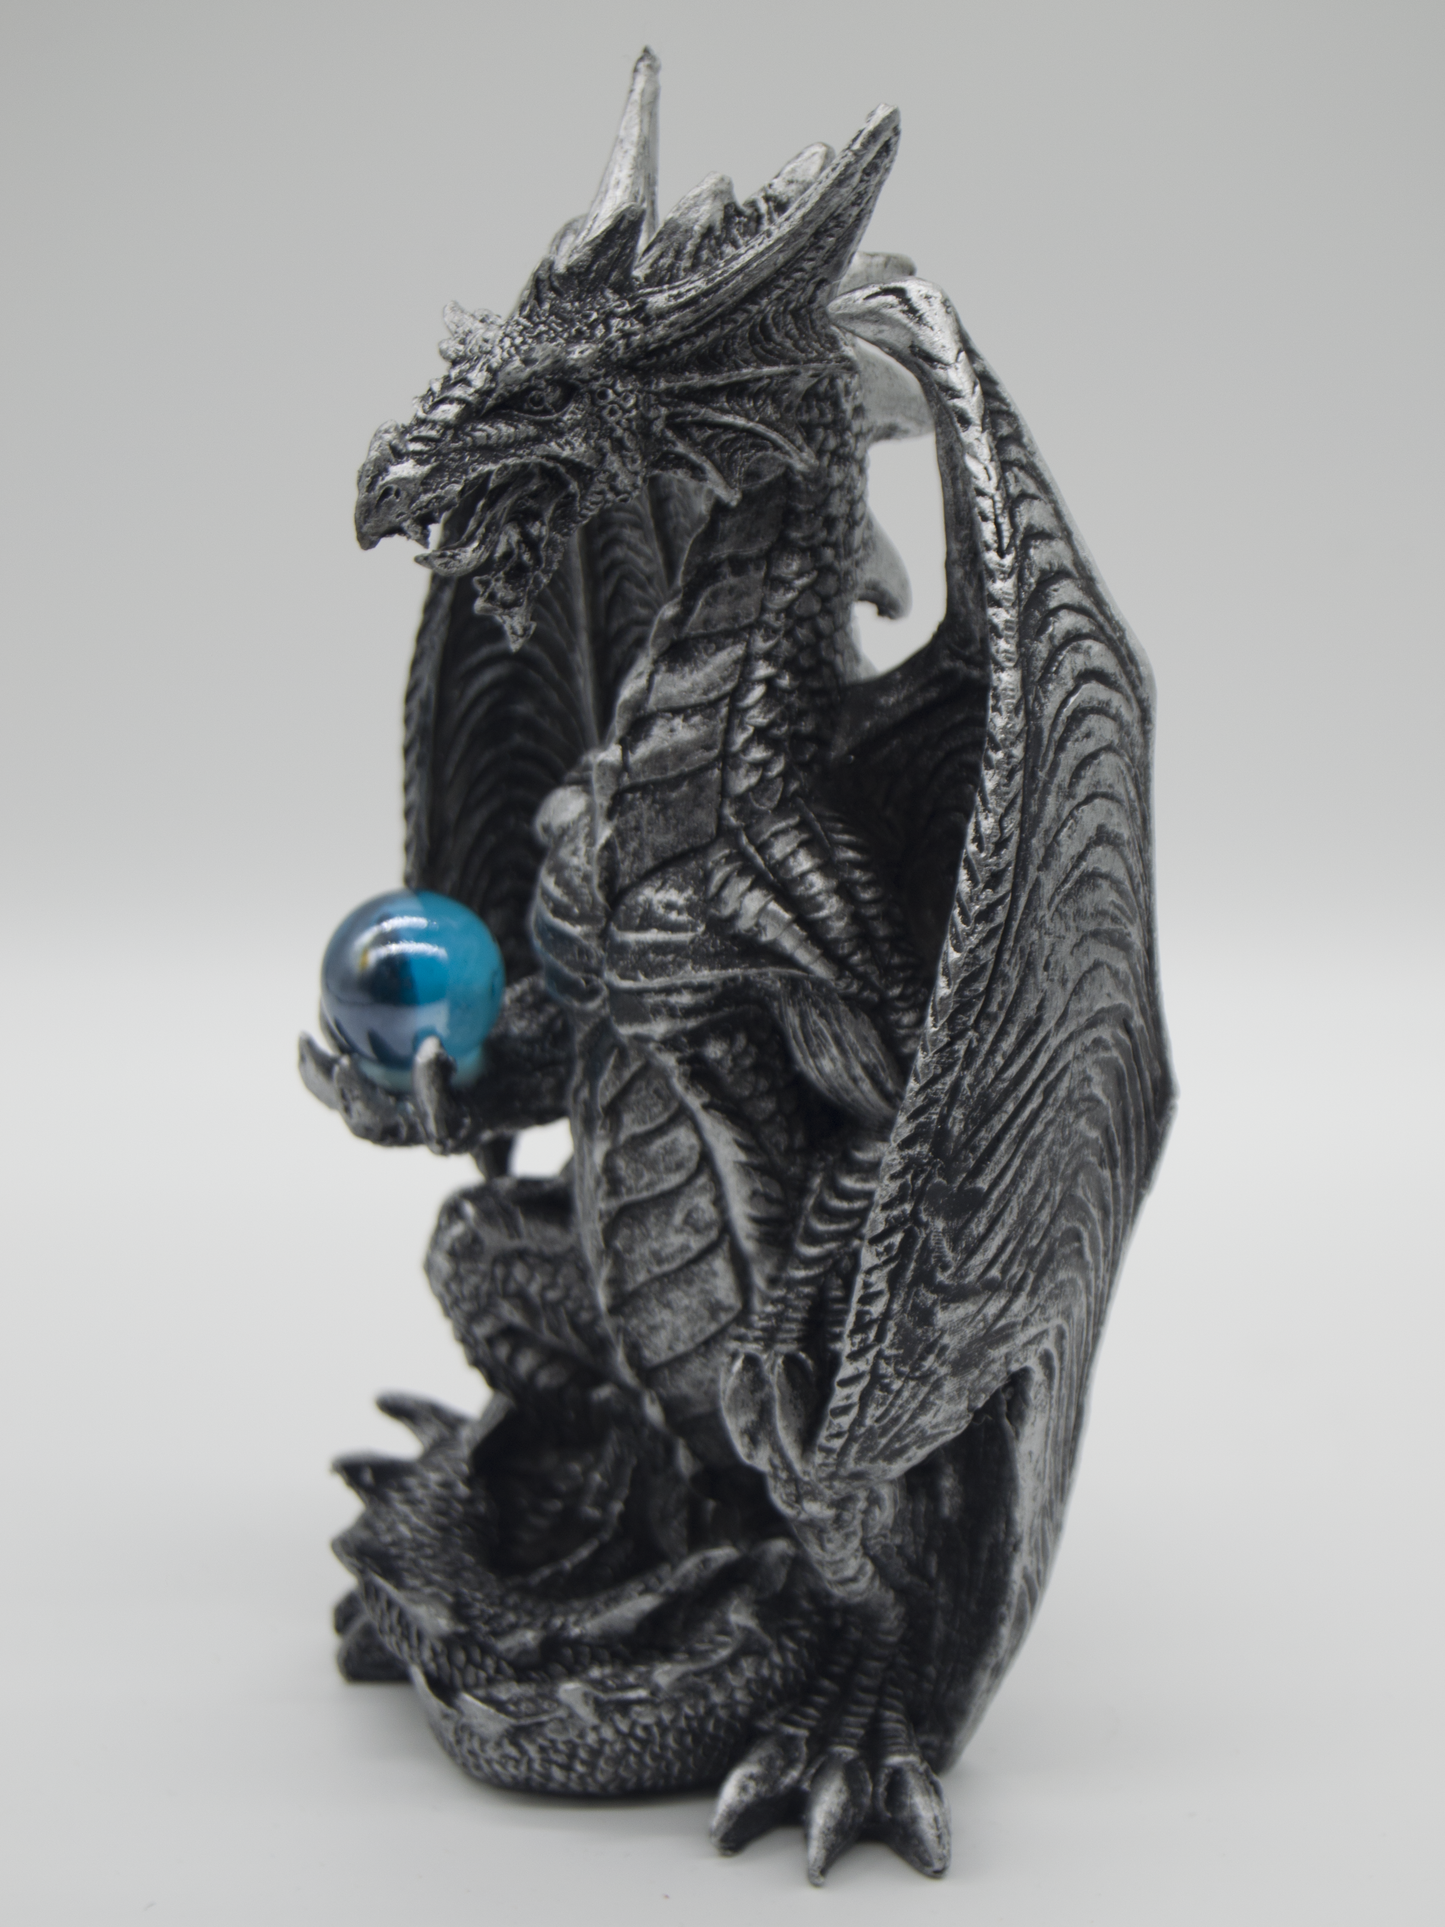 Silver Dragon Holding A Blue Orb